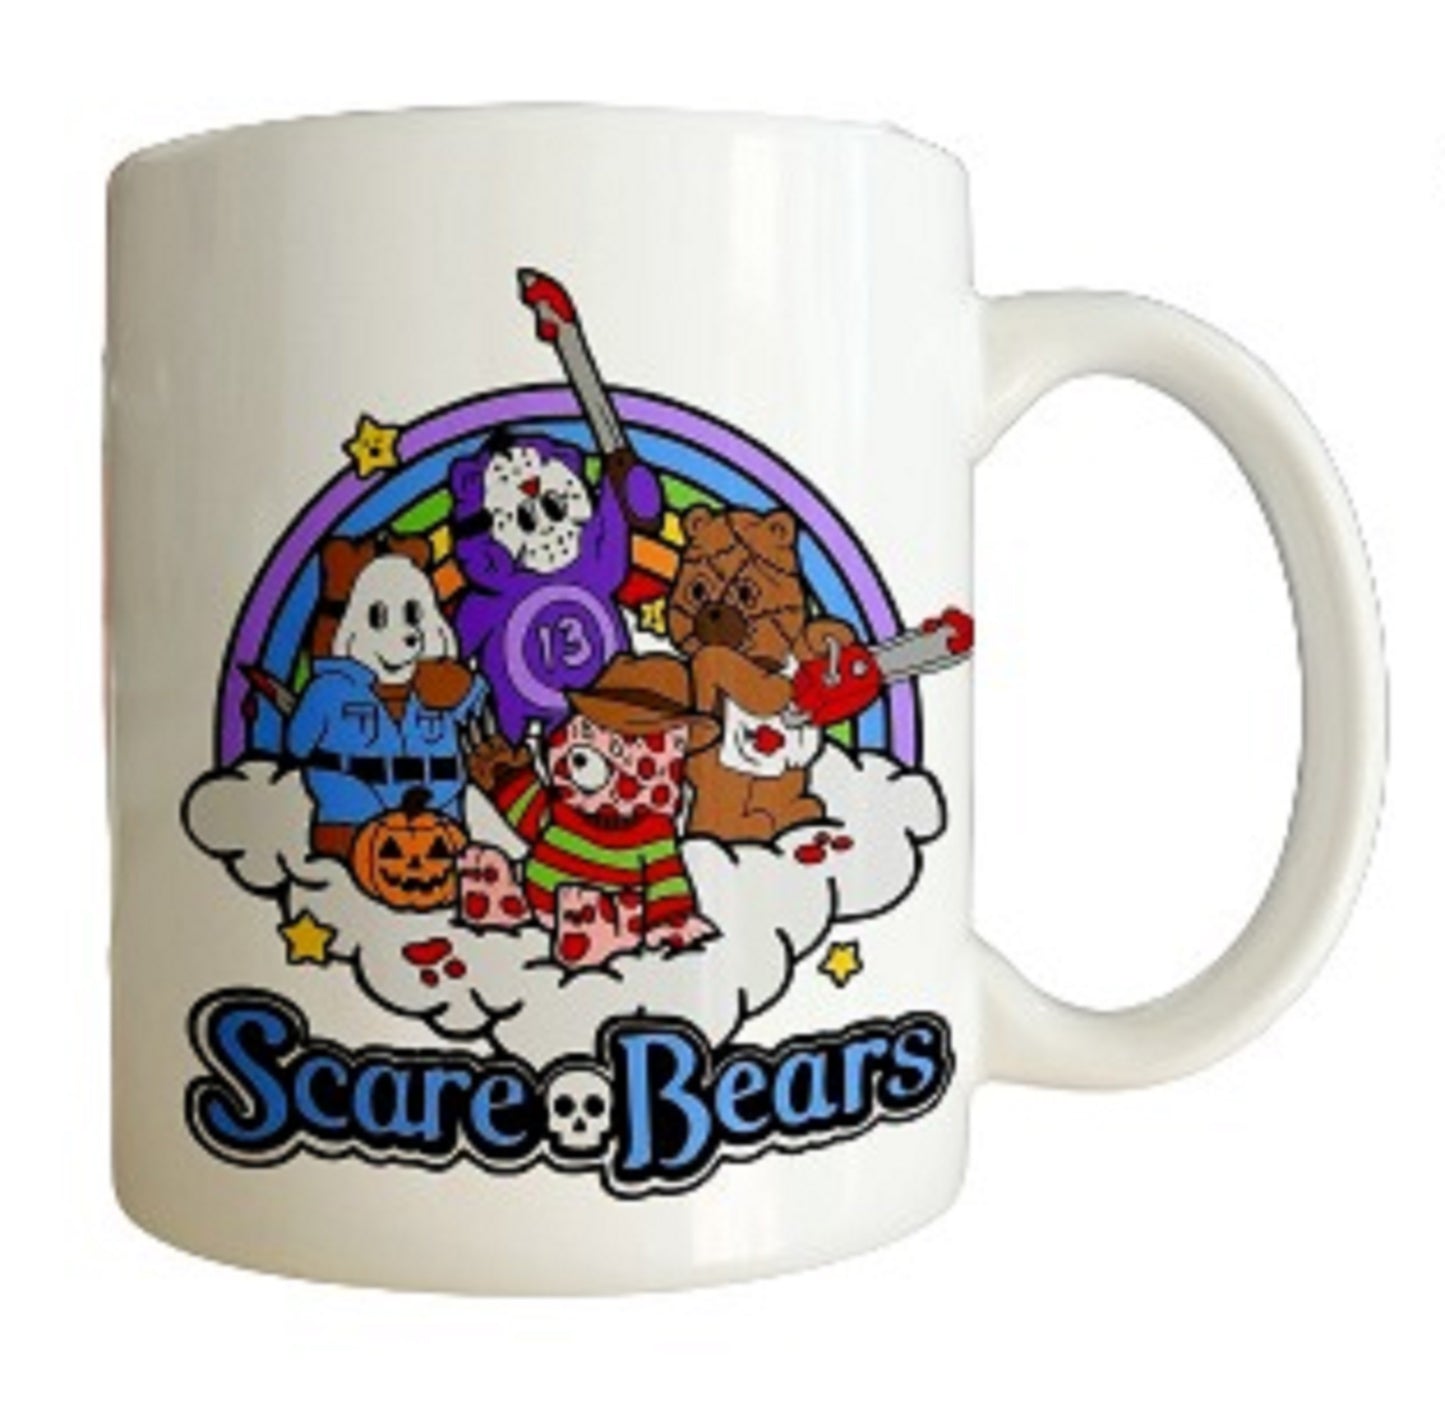  Scare Bears Halloween Horror Mug by Free Spirit Accessories sold by Free Spirit Accessories